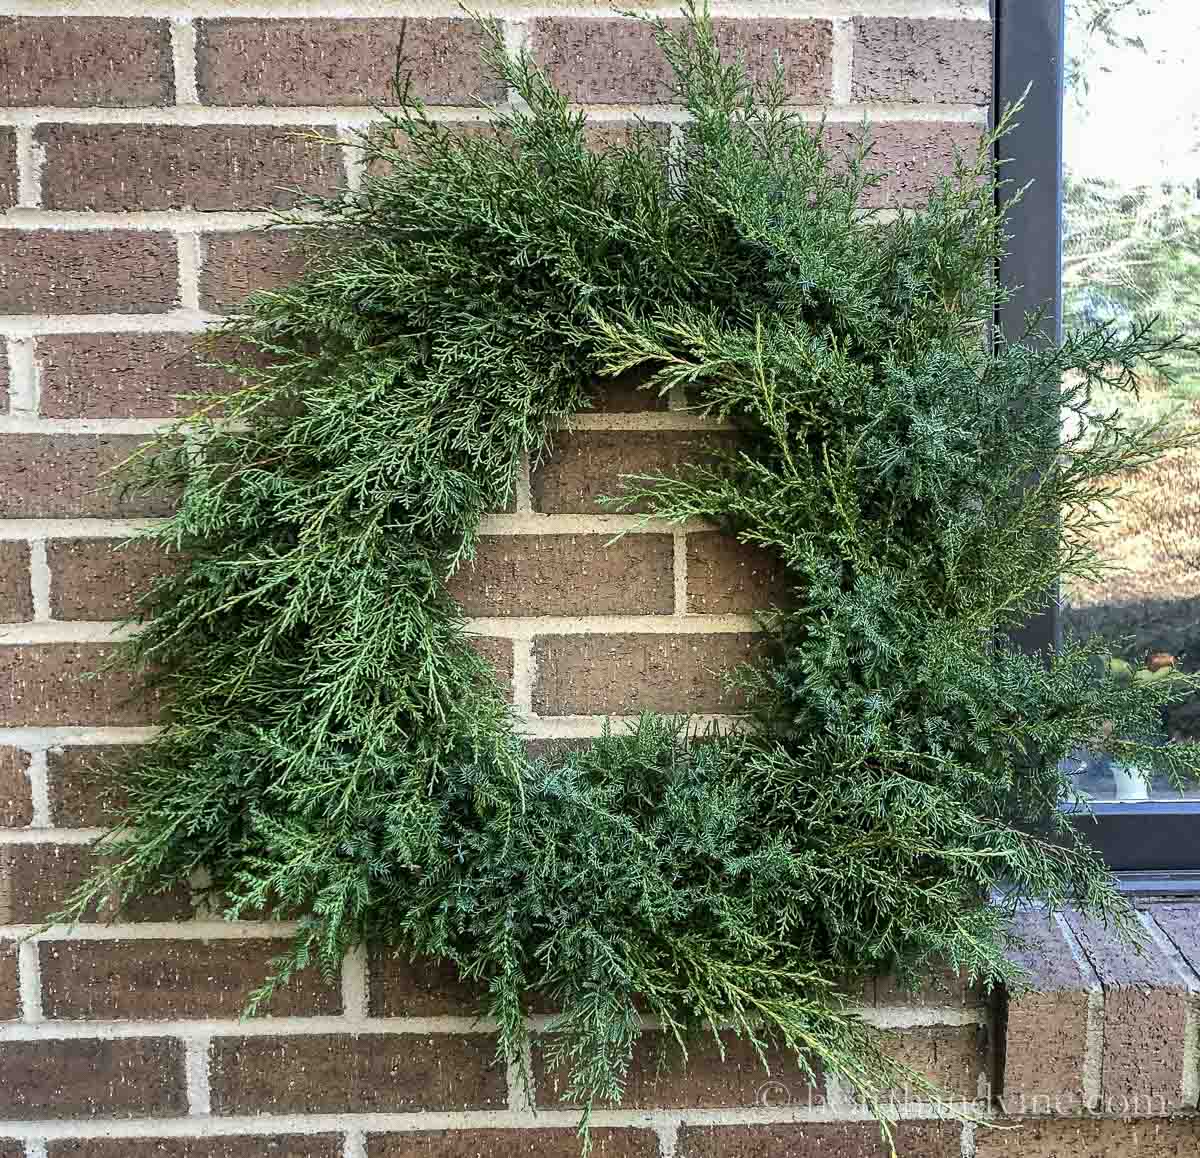 A fresh juniper wreath hanging on a brick wall.